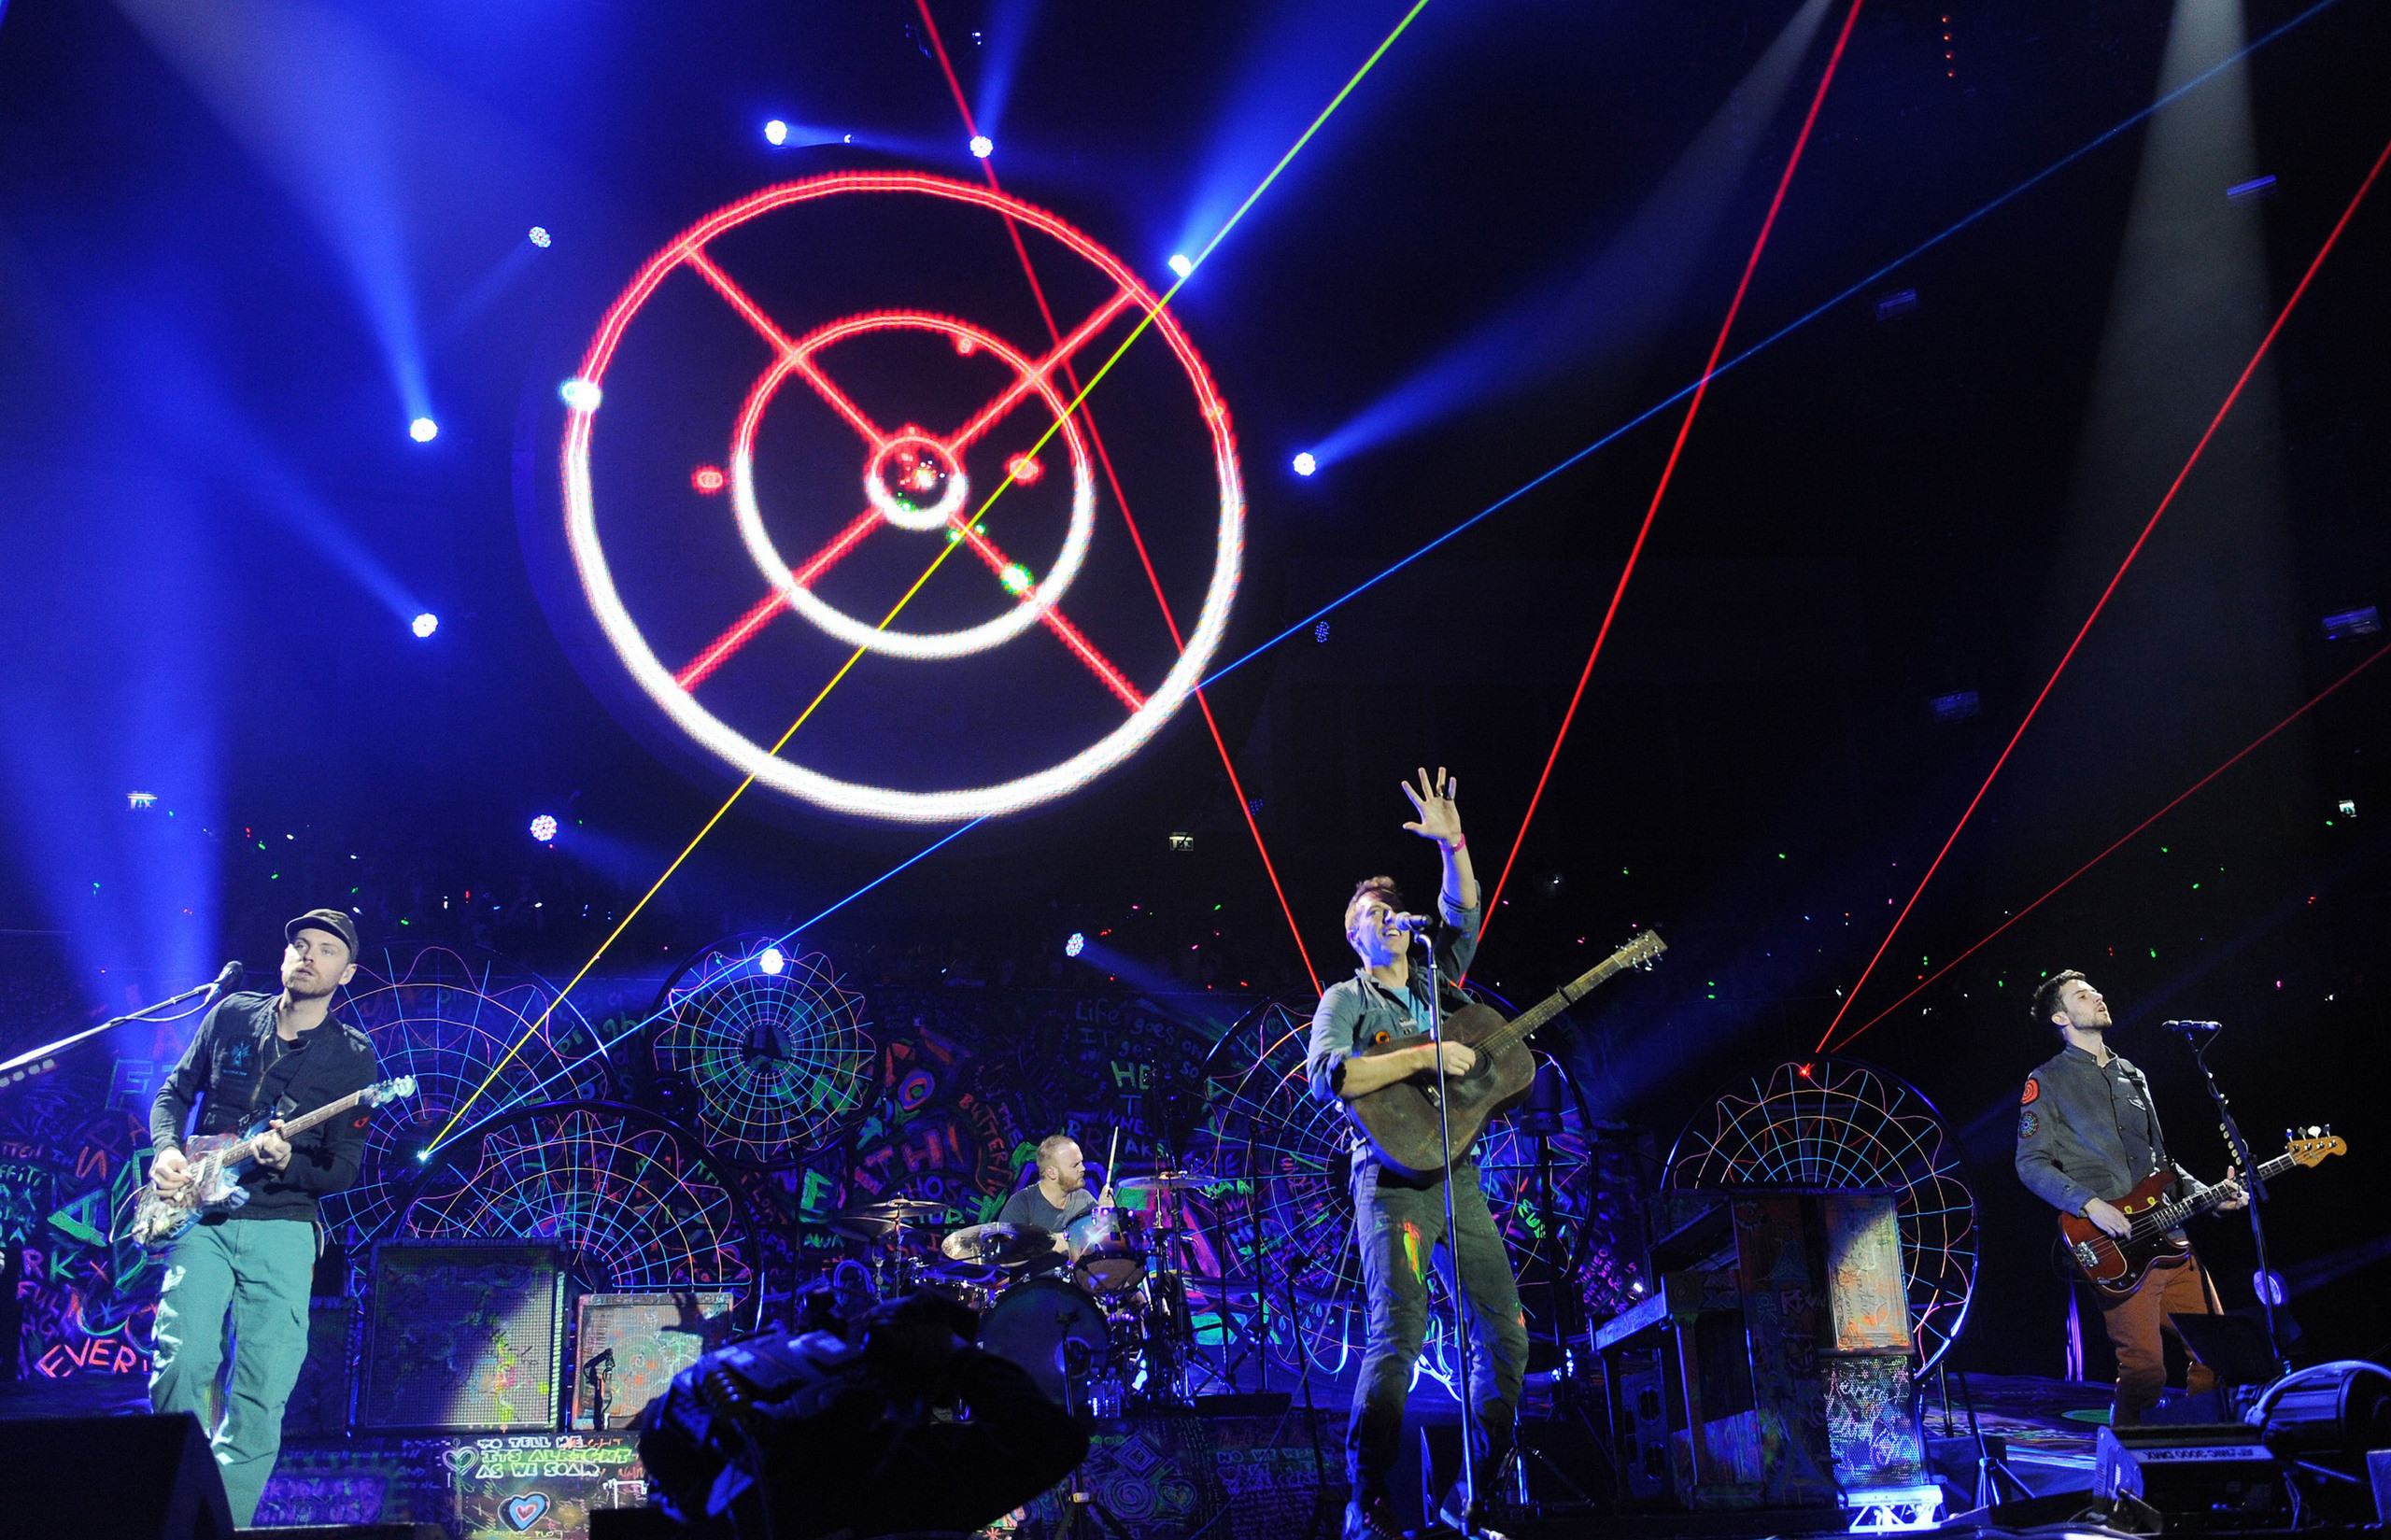 Концерты развлечения. Coldplay Mylo Xyloto 2011. Музыкальный тур. Music Tour in London. Колдплэй 2000.